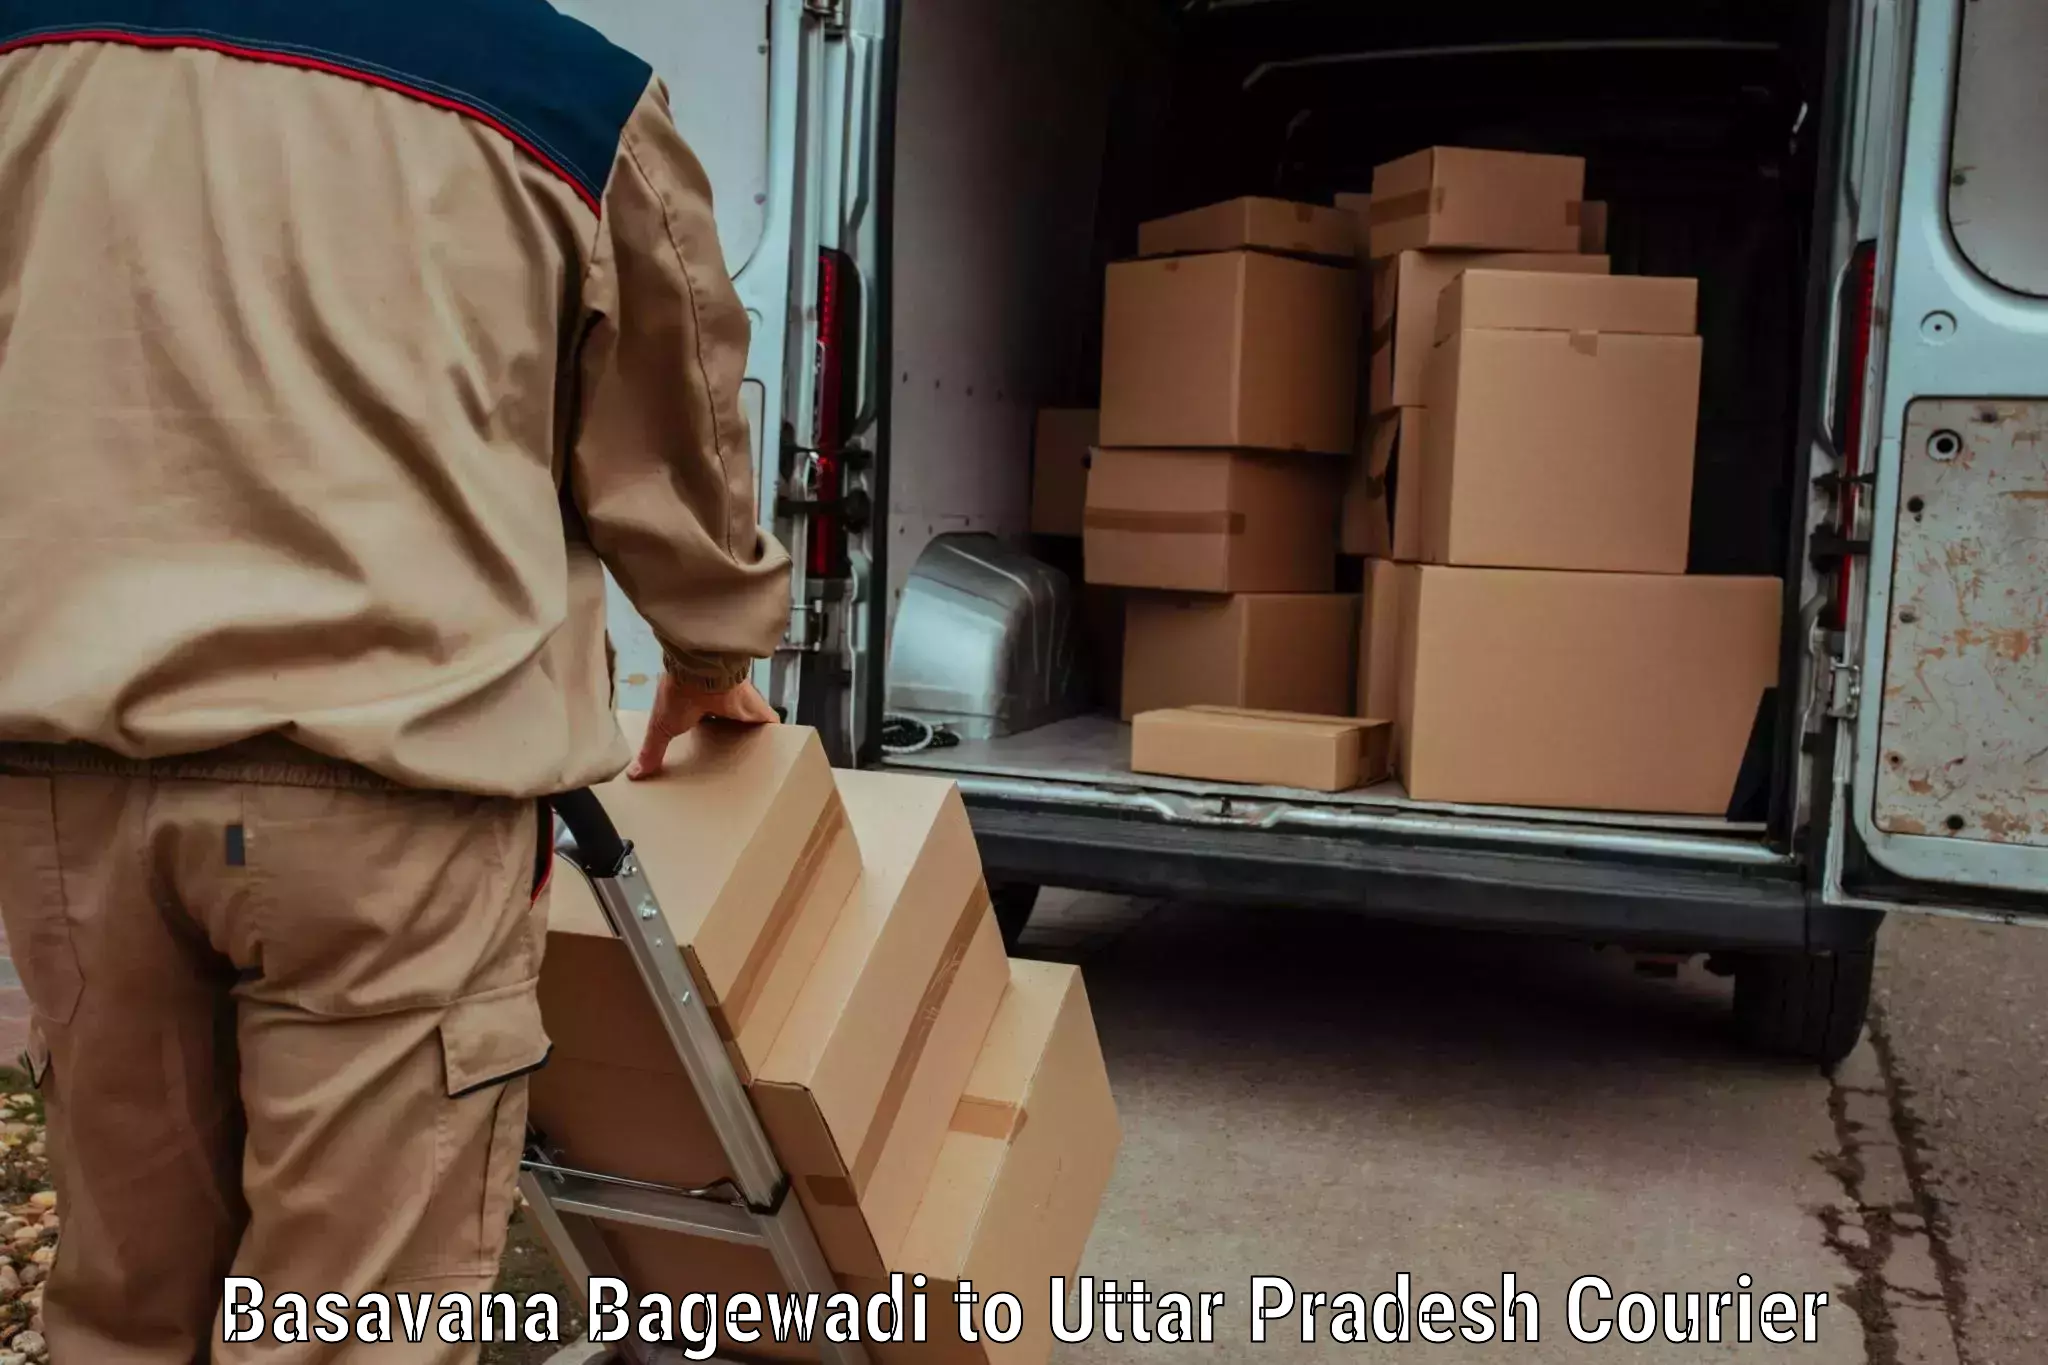 Global shipping networks Basavana Bagewadi to Manjhanpur